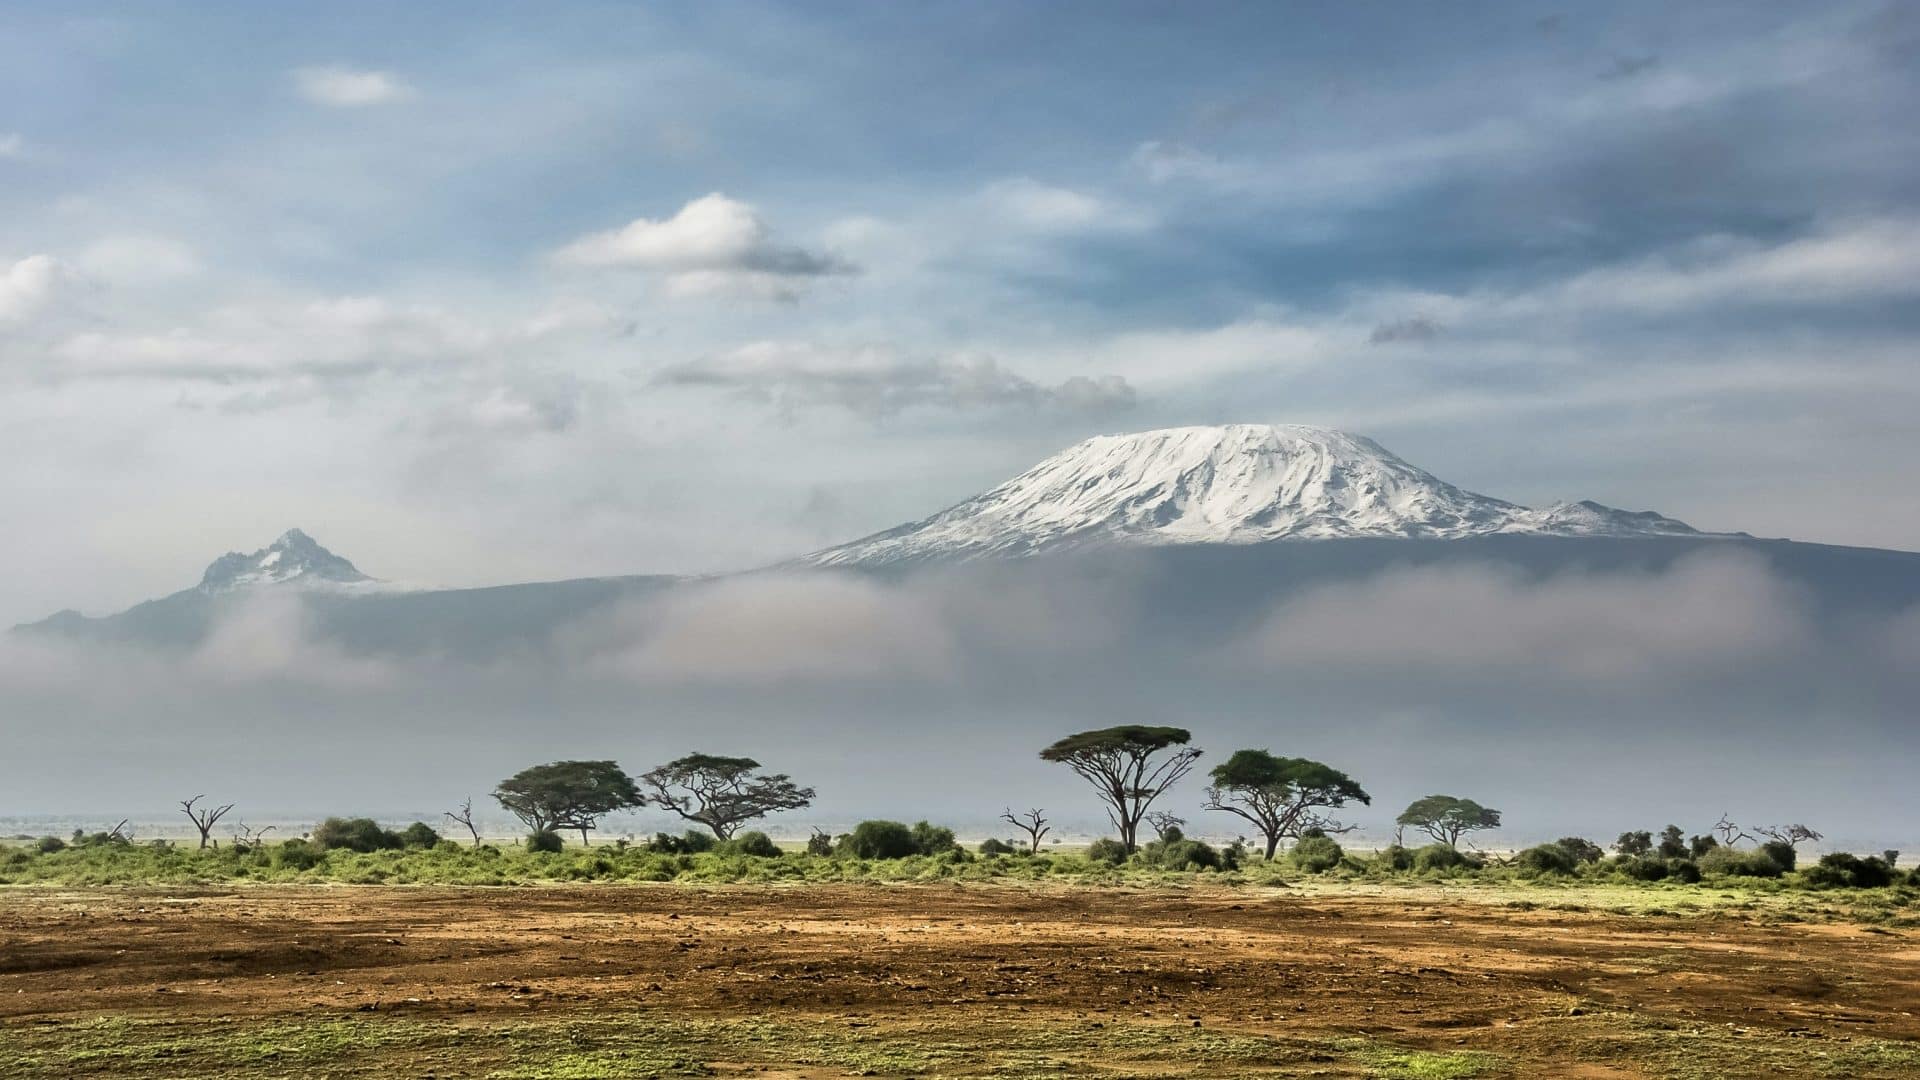 Kenia Baumpflanzen Touristen